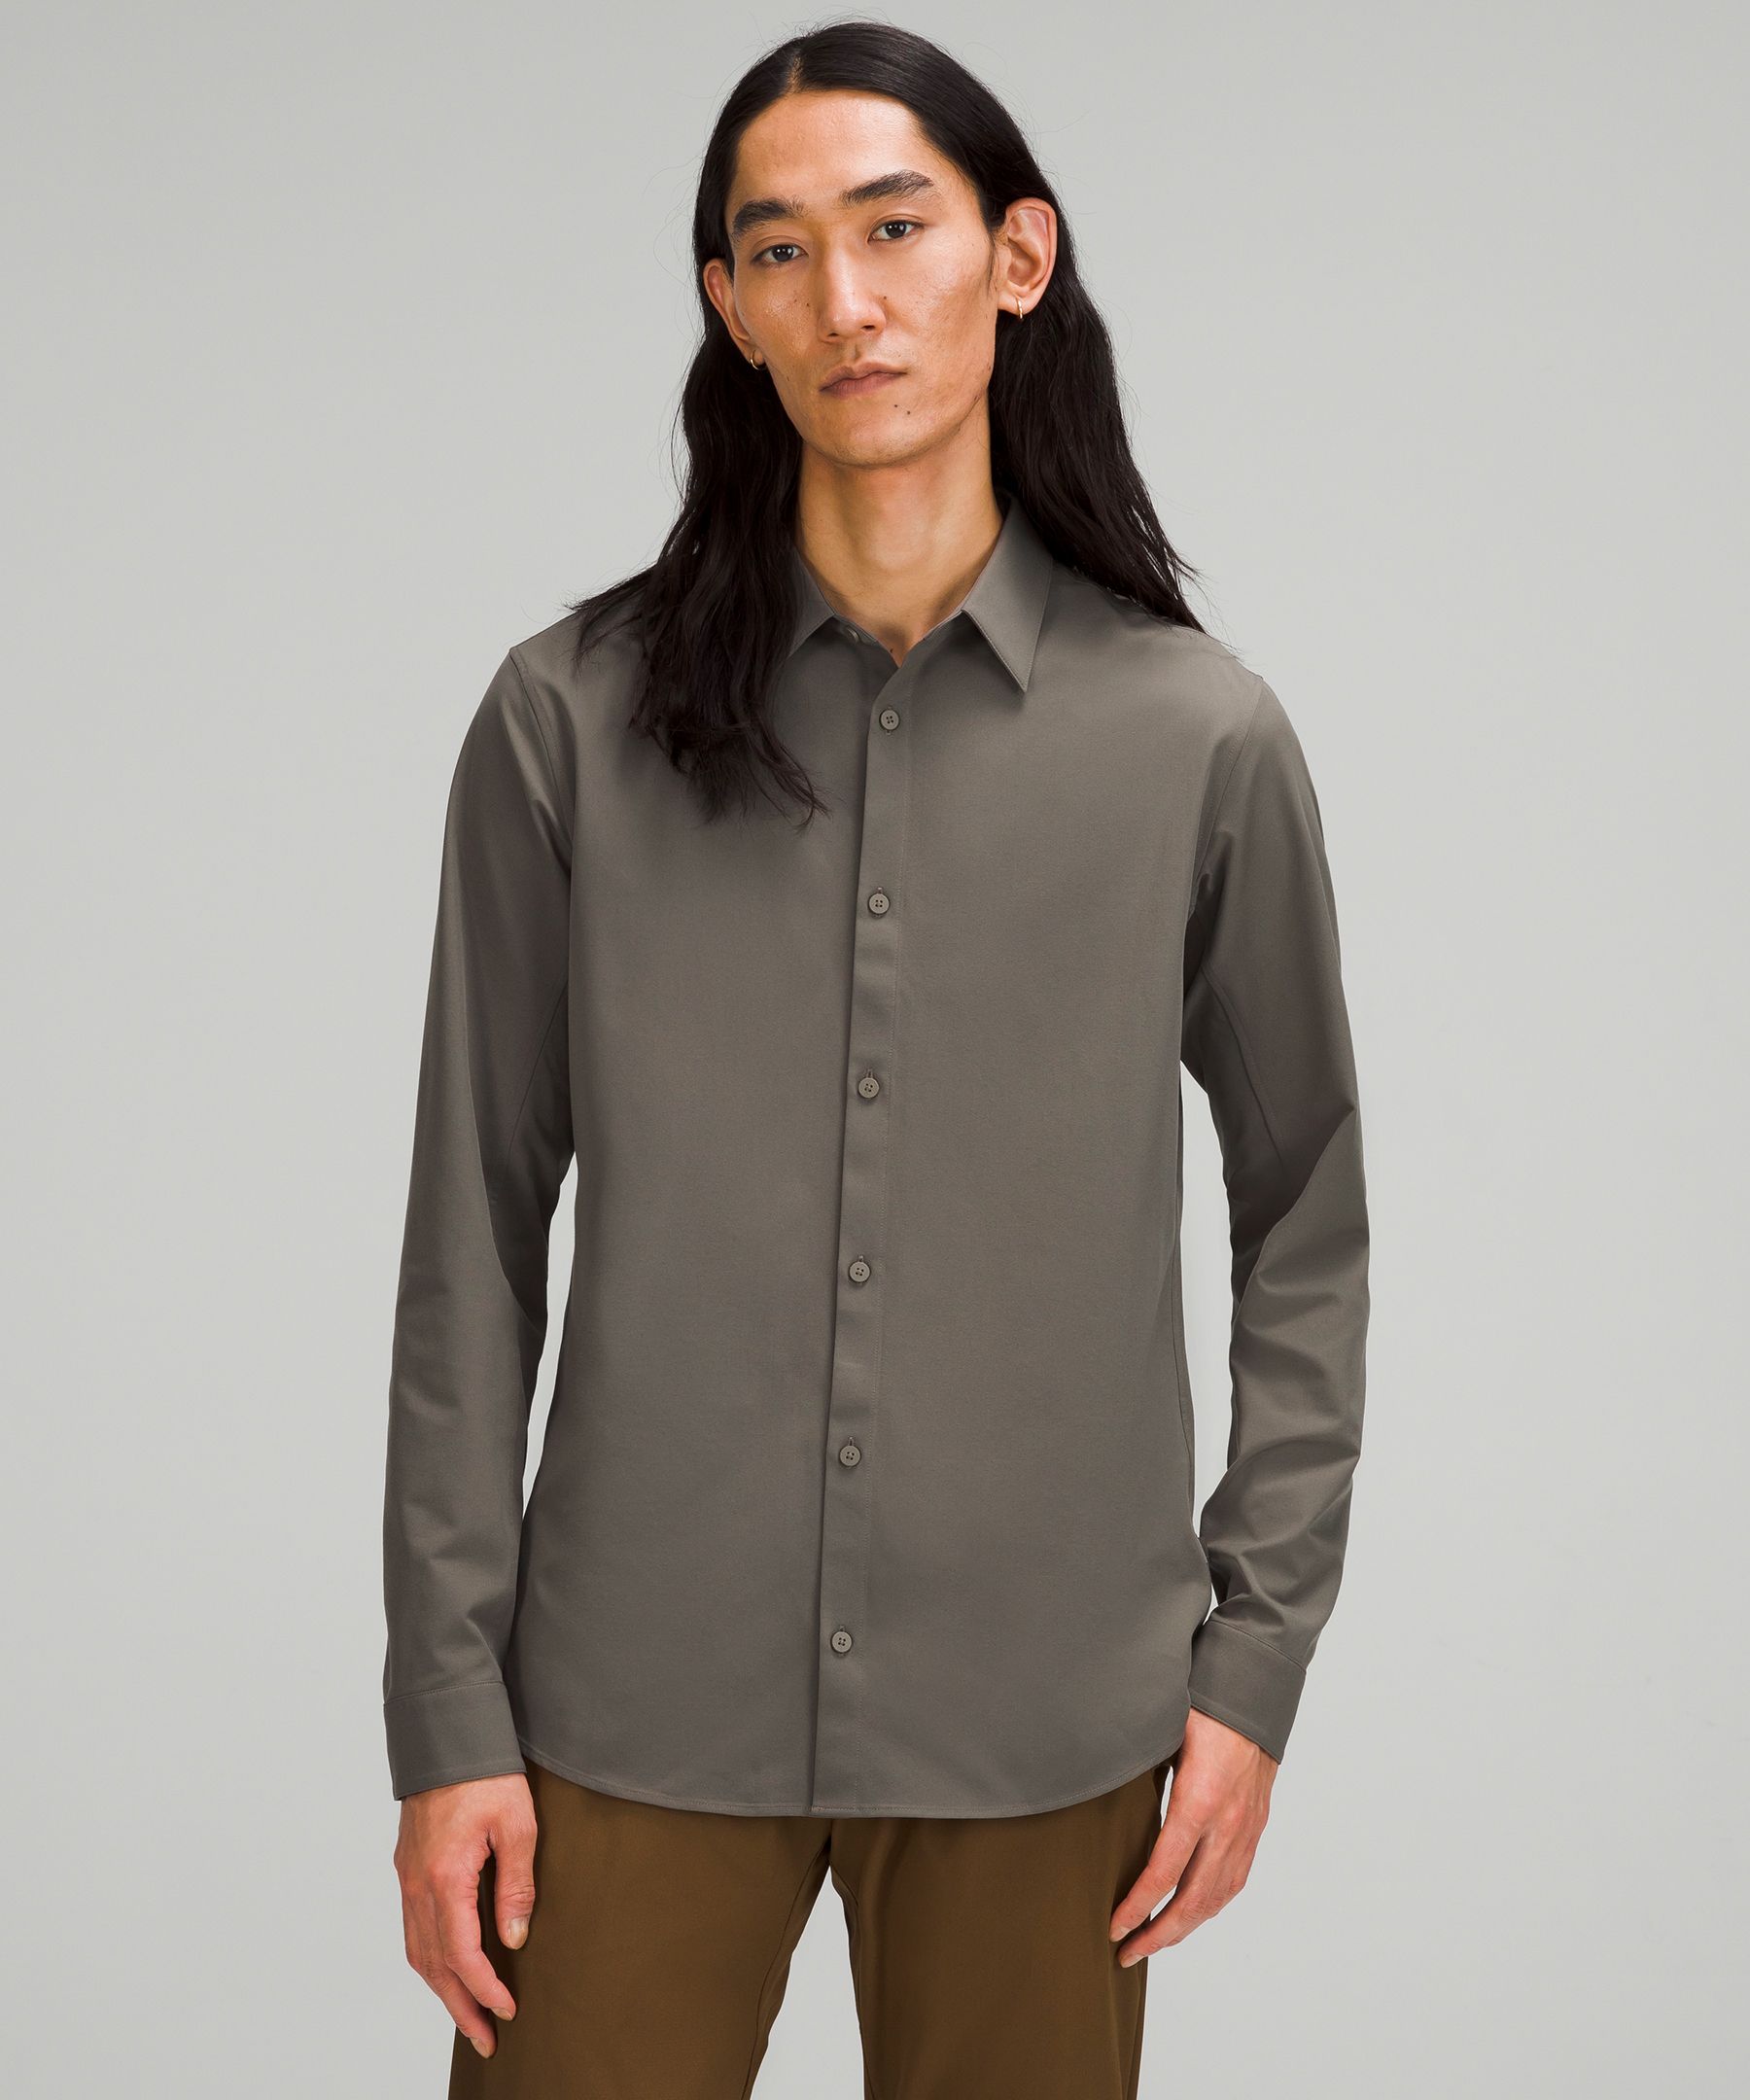 Lululemon New Venture Long Sleeve Shirt